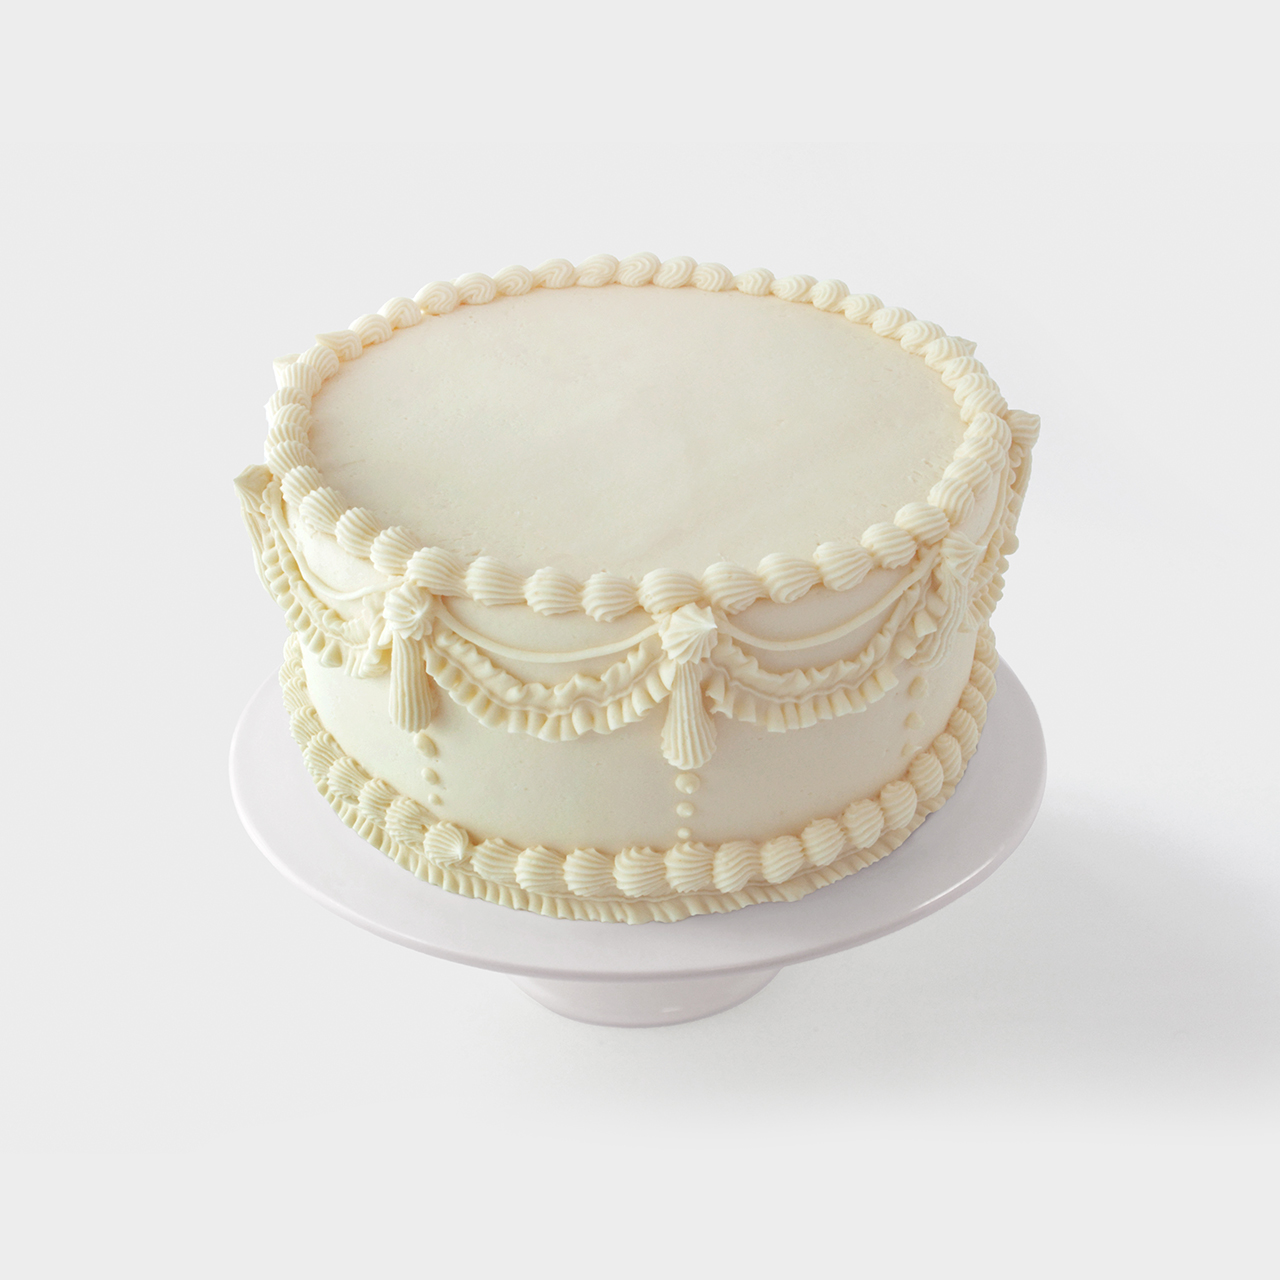 White Vintage Cake for baby shower 